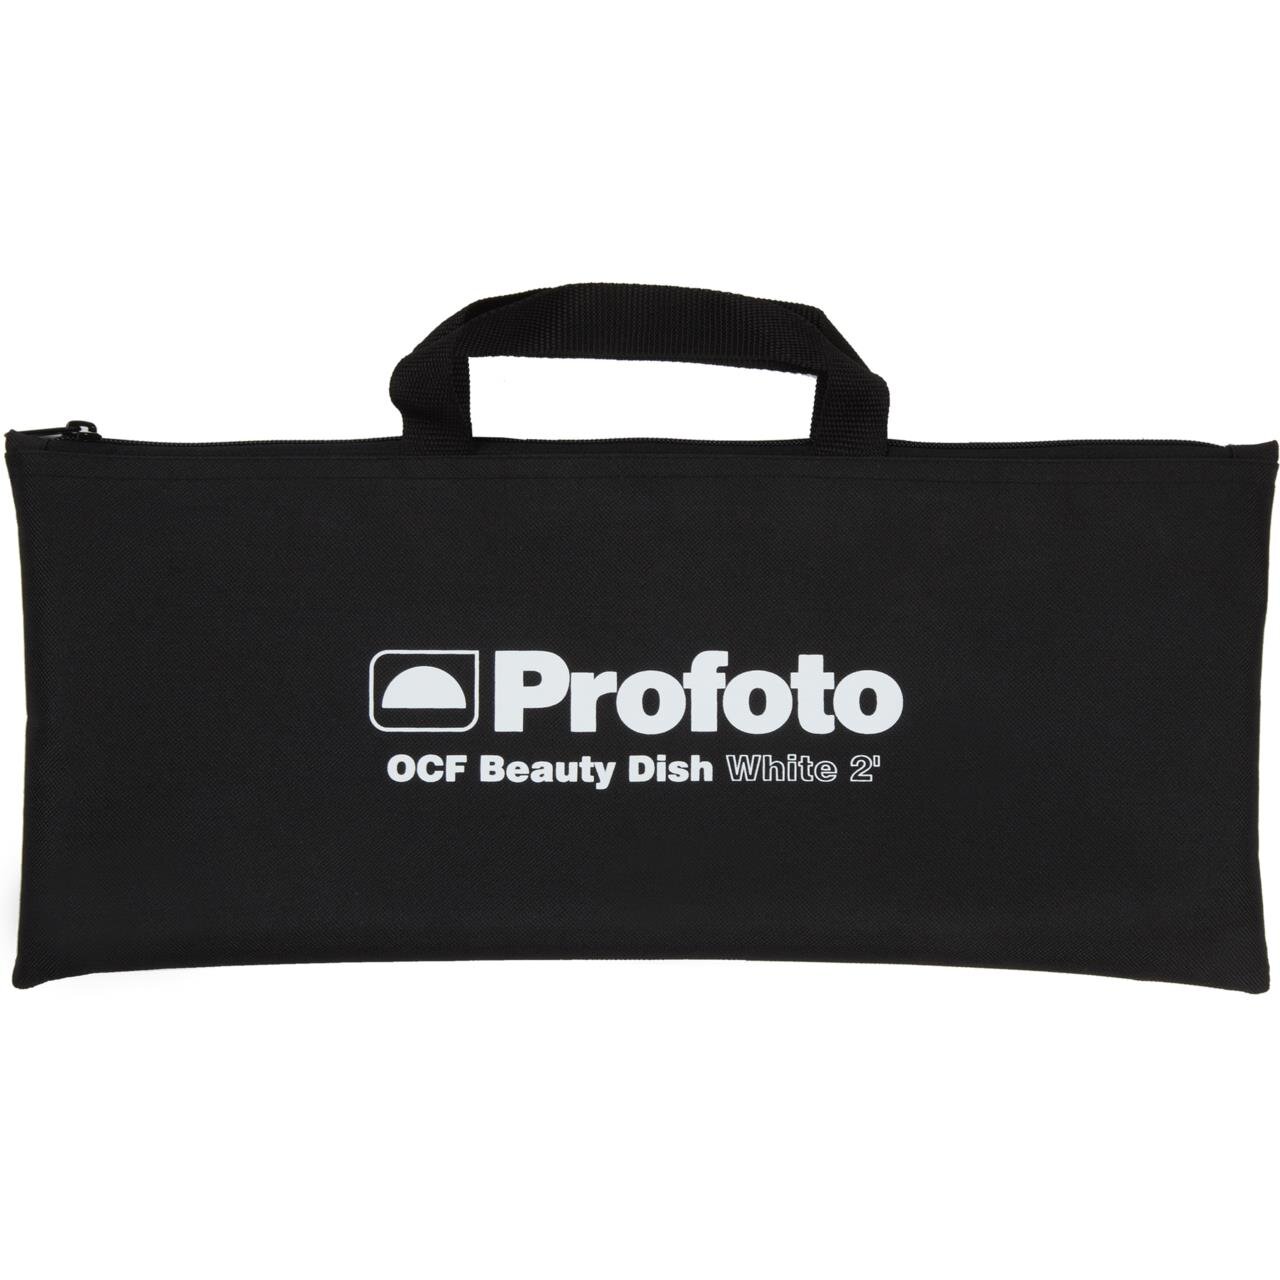 101220_f_profoto-ocf-beauty-dish-white-2-carrying-bag_productimage.png.jpeg